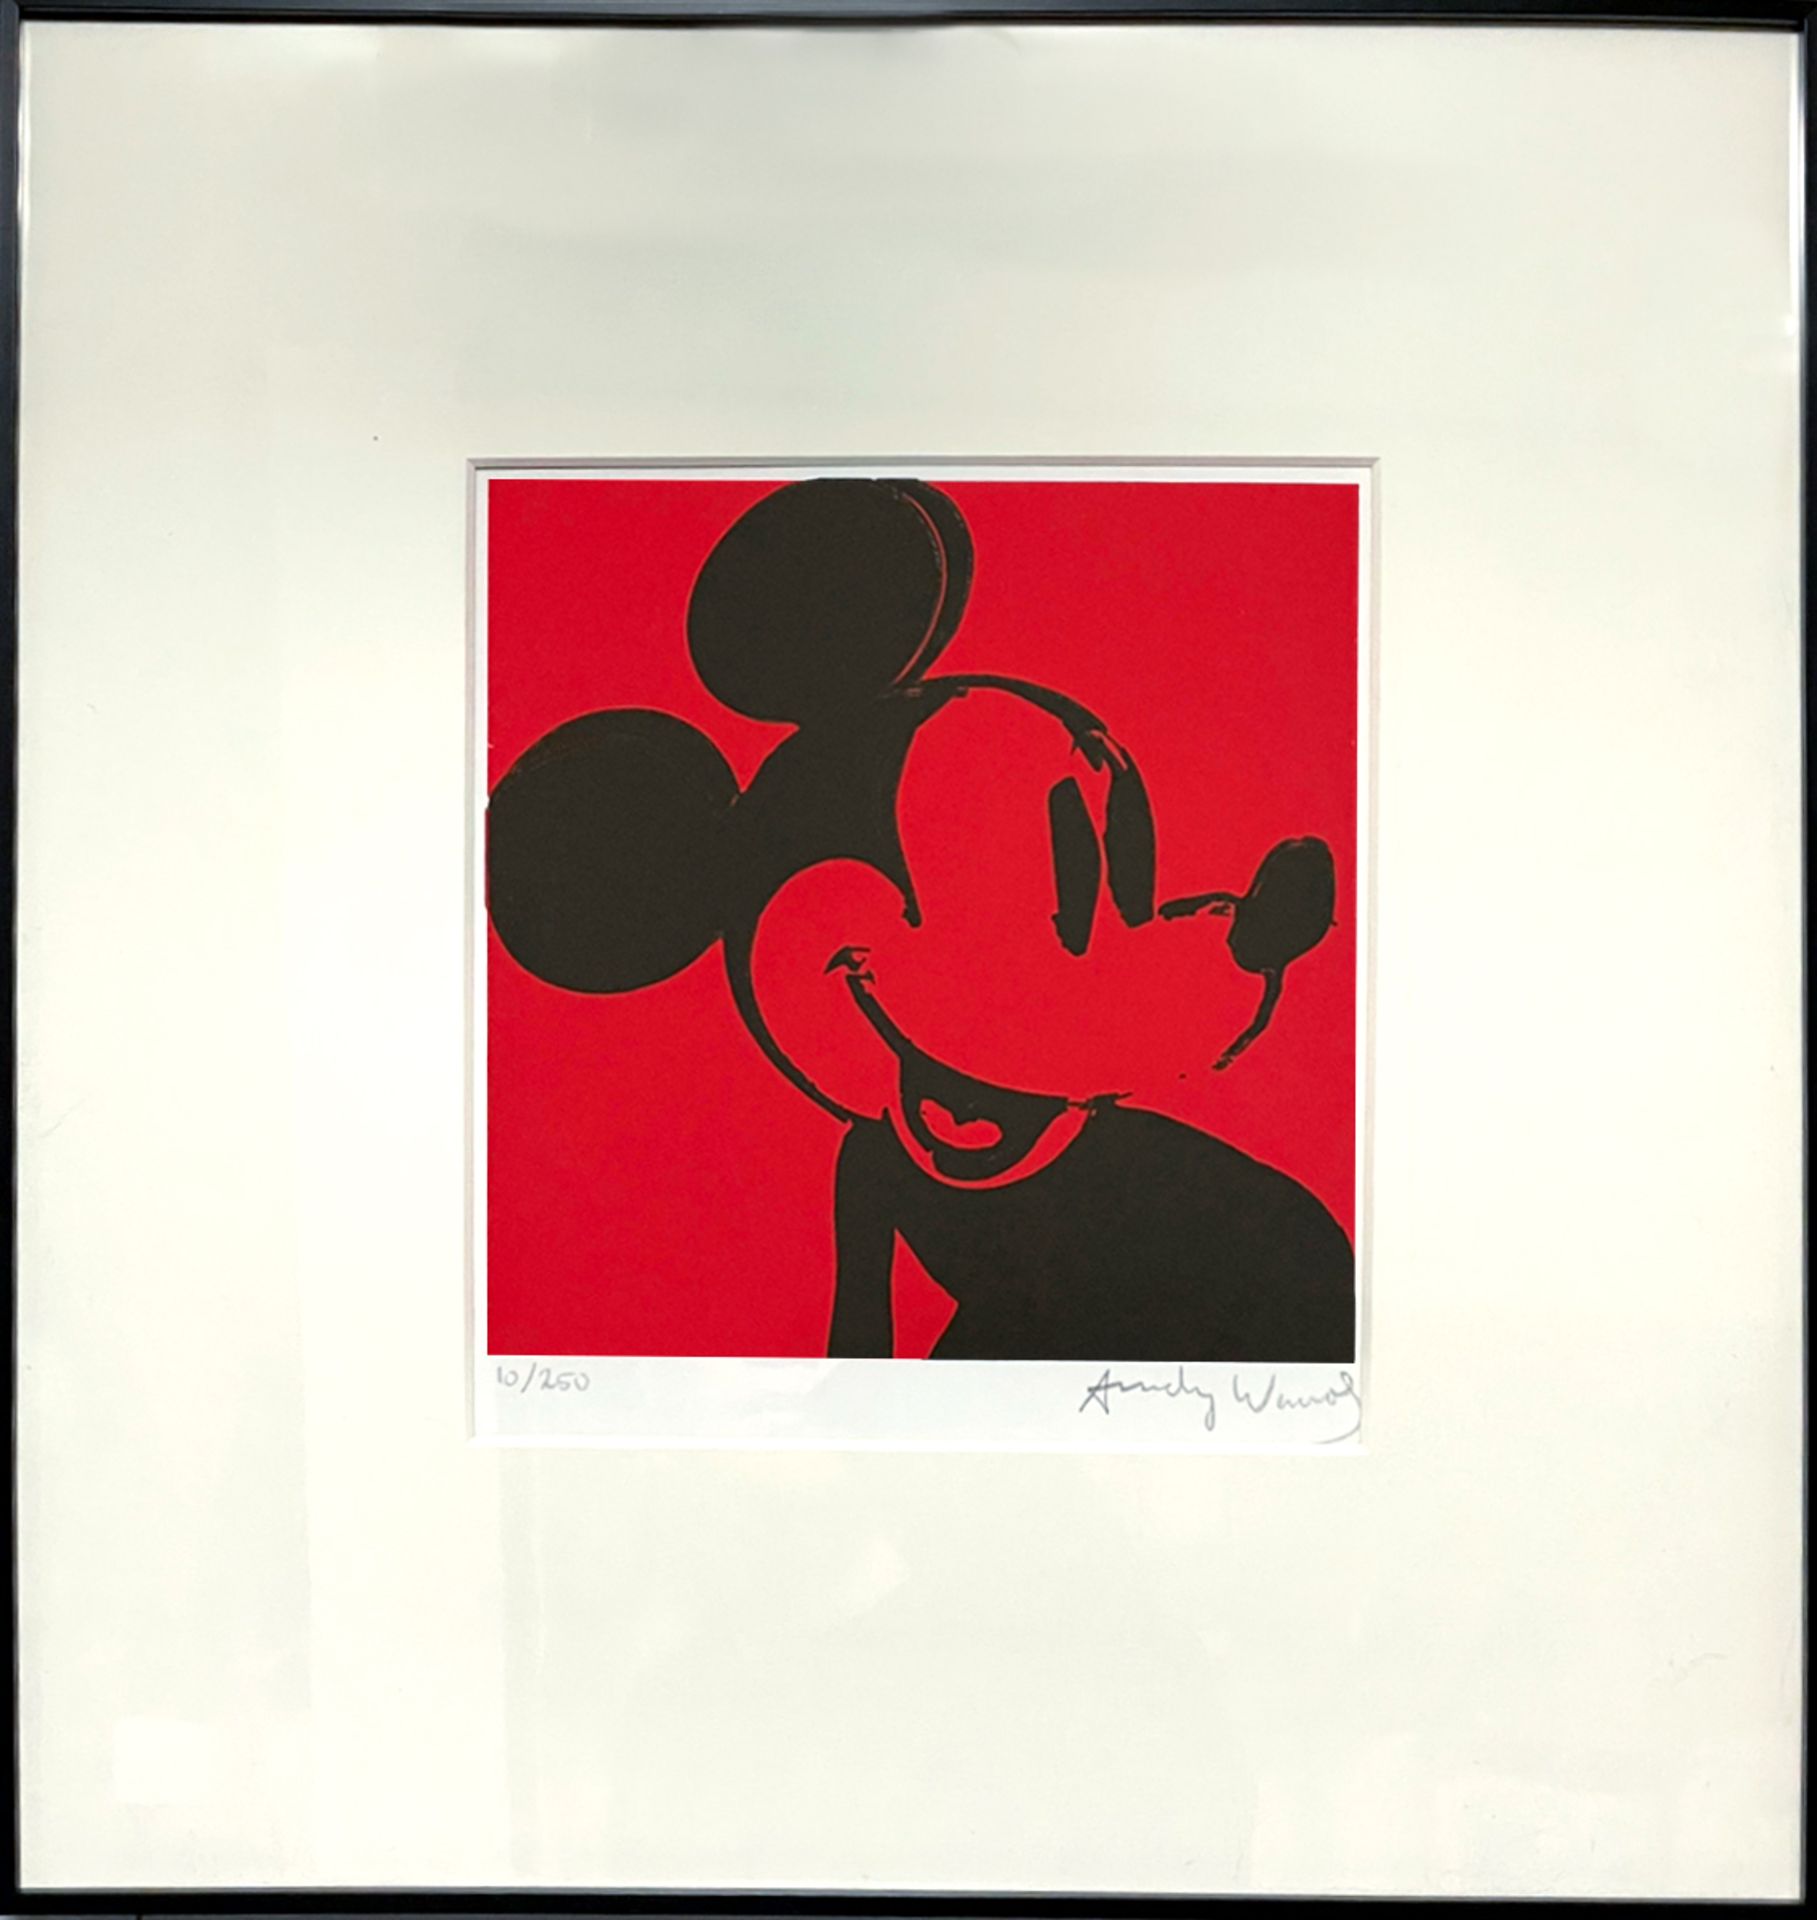 Andy Warhol (1928-1987), Silkscreen Print